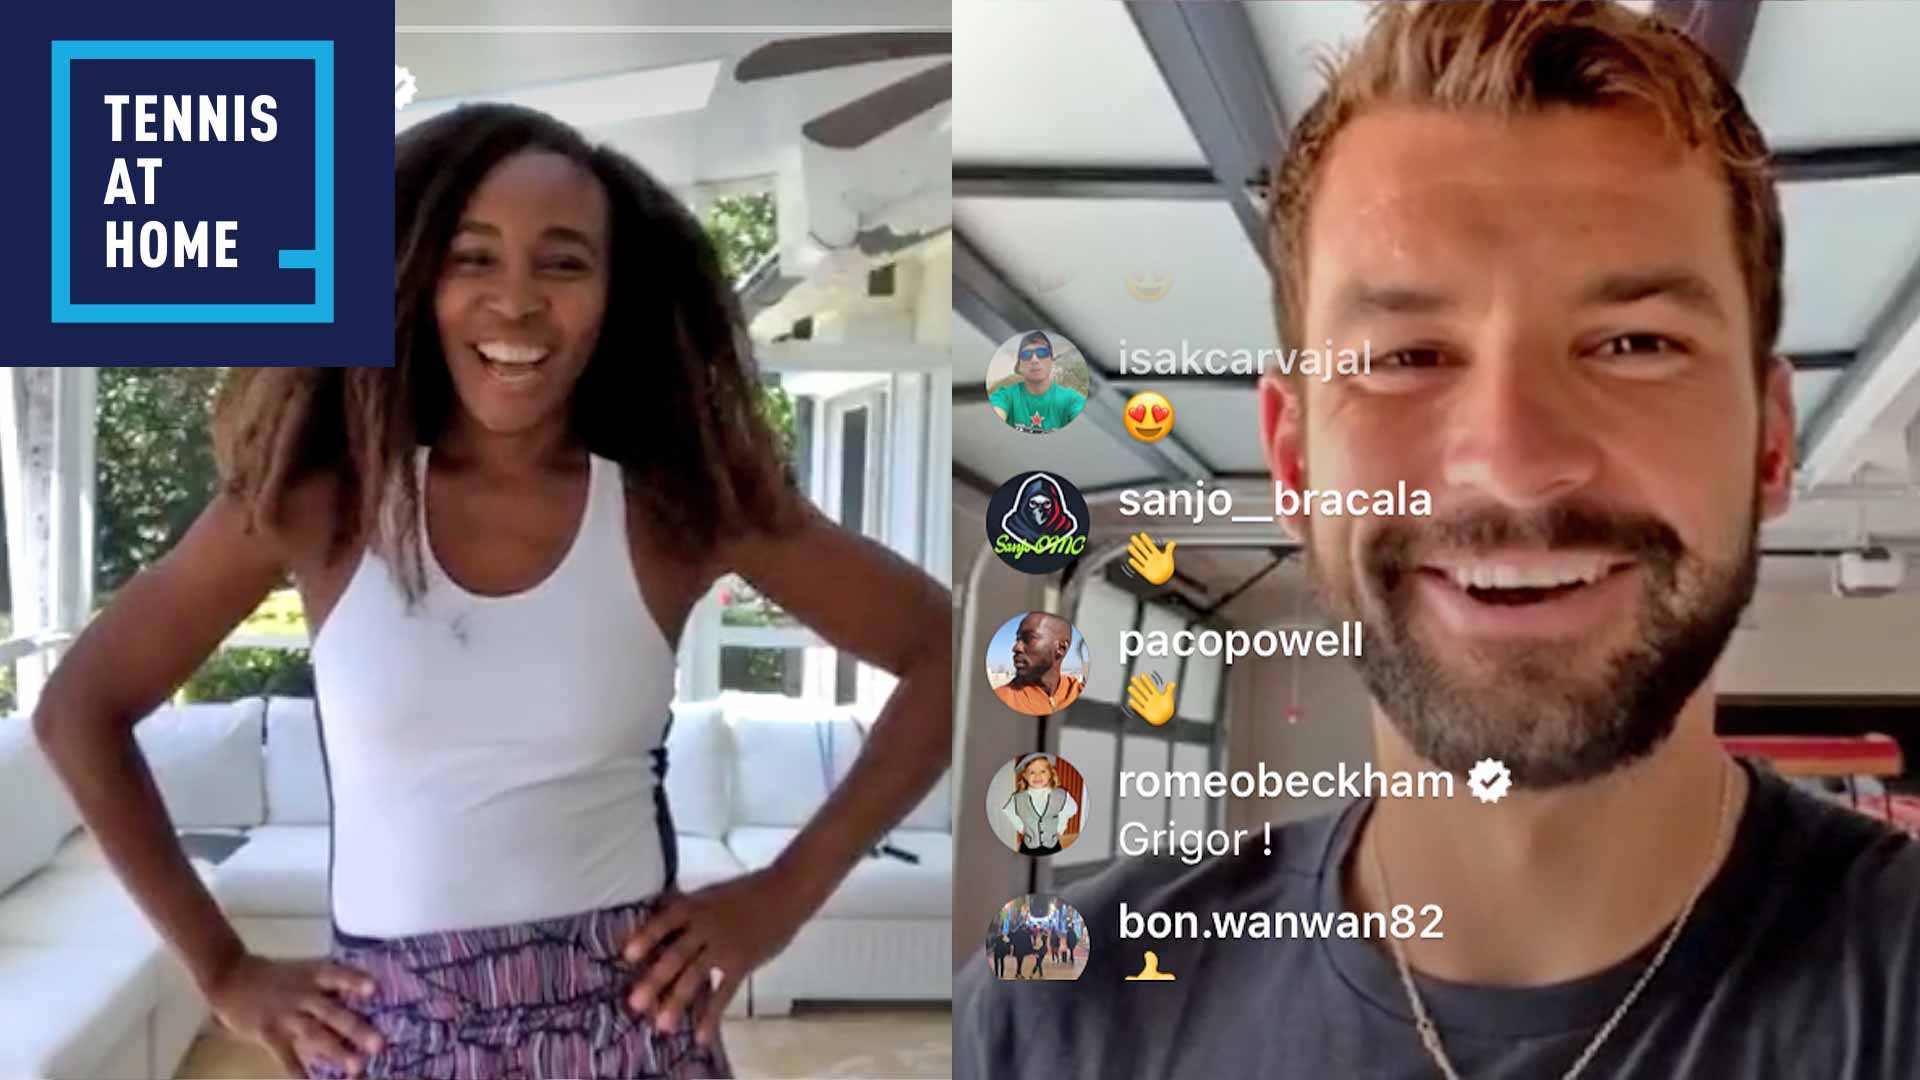 Venus Williams and Grigor Dimitrovs Group Workout On Instagram Live ATP Tour Tennis